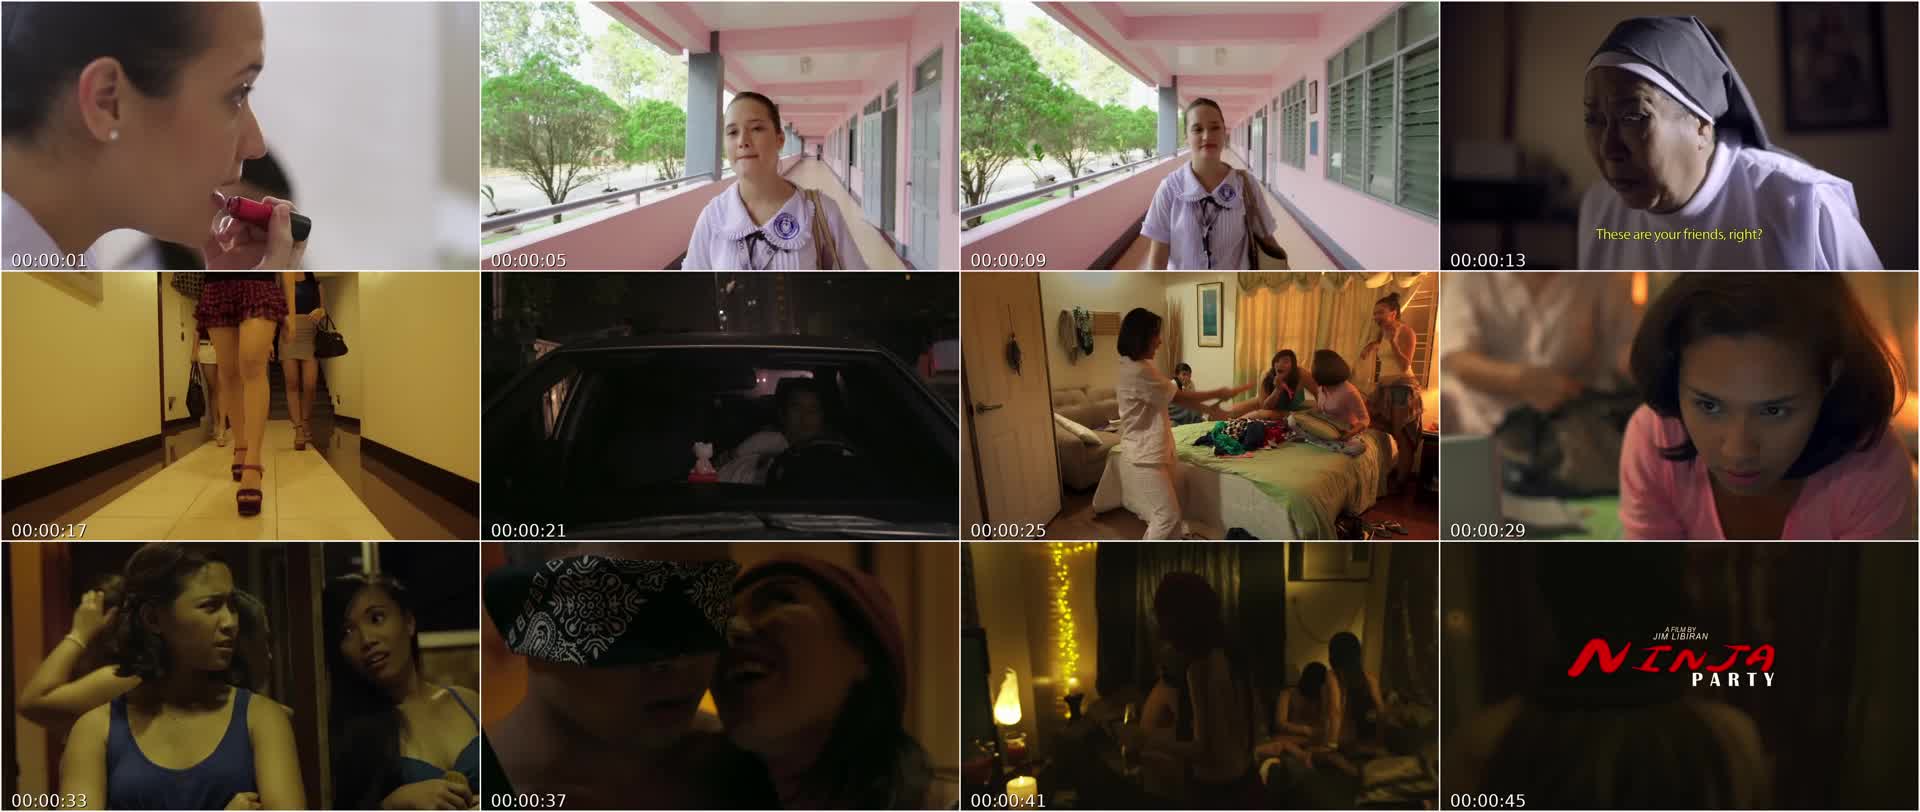 NINJA PARTY Trailer (R-16 version) for Sinag Maynila Film Festival